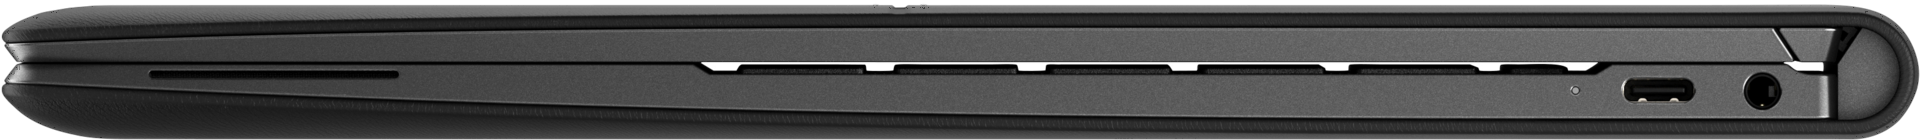 HP Elite Folio Slider Snapdragon 8cx Kryo 495 Win 11 Pro Qualcomm Adreno 690 8 GB RAM 256 GB SSD NVMe, TLC 34.3 cm (13.5) IPS Touchscreen HP SureView Reflect 1920 x 1280 Wi Fi 6 4G kbd Deutsch mit HP 3 years NBD Notebook3 Bundle Service  - Onlineshop JACOB Elektronik